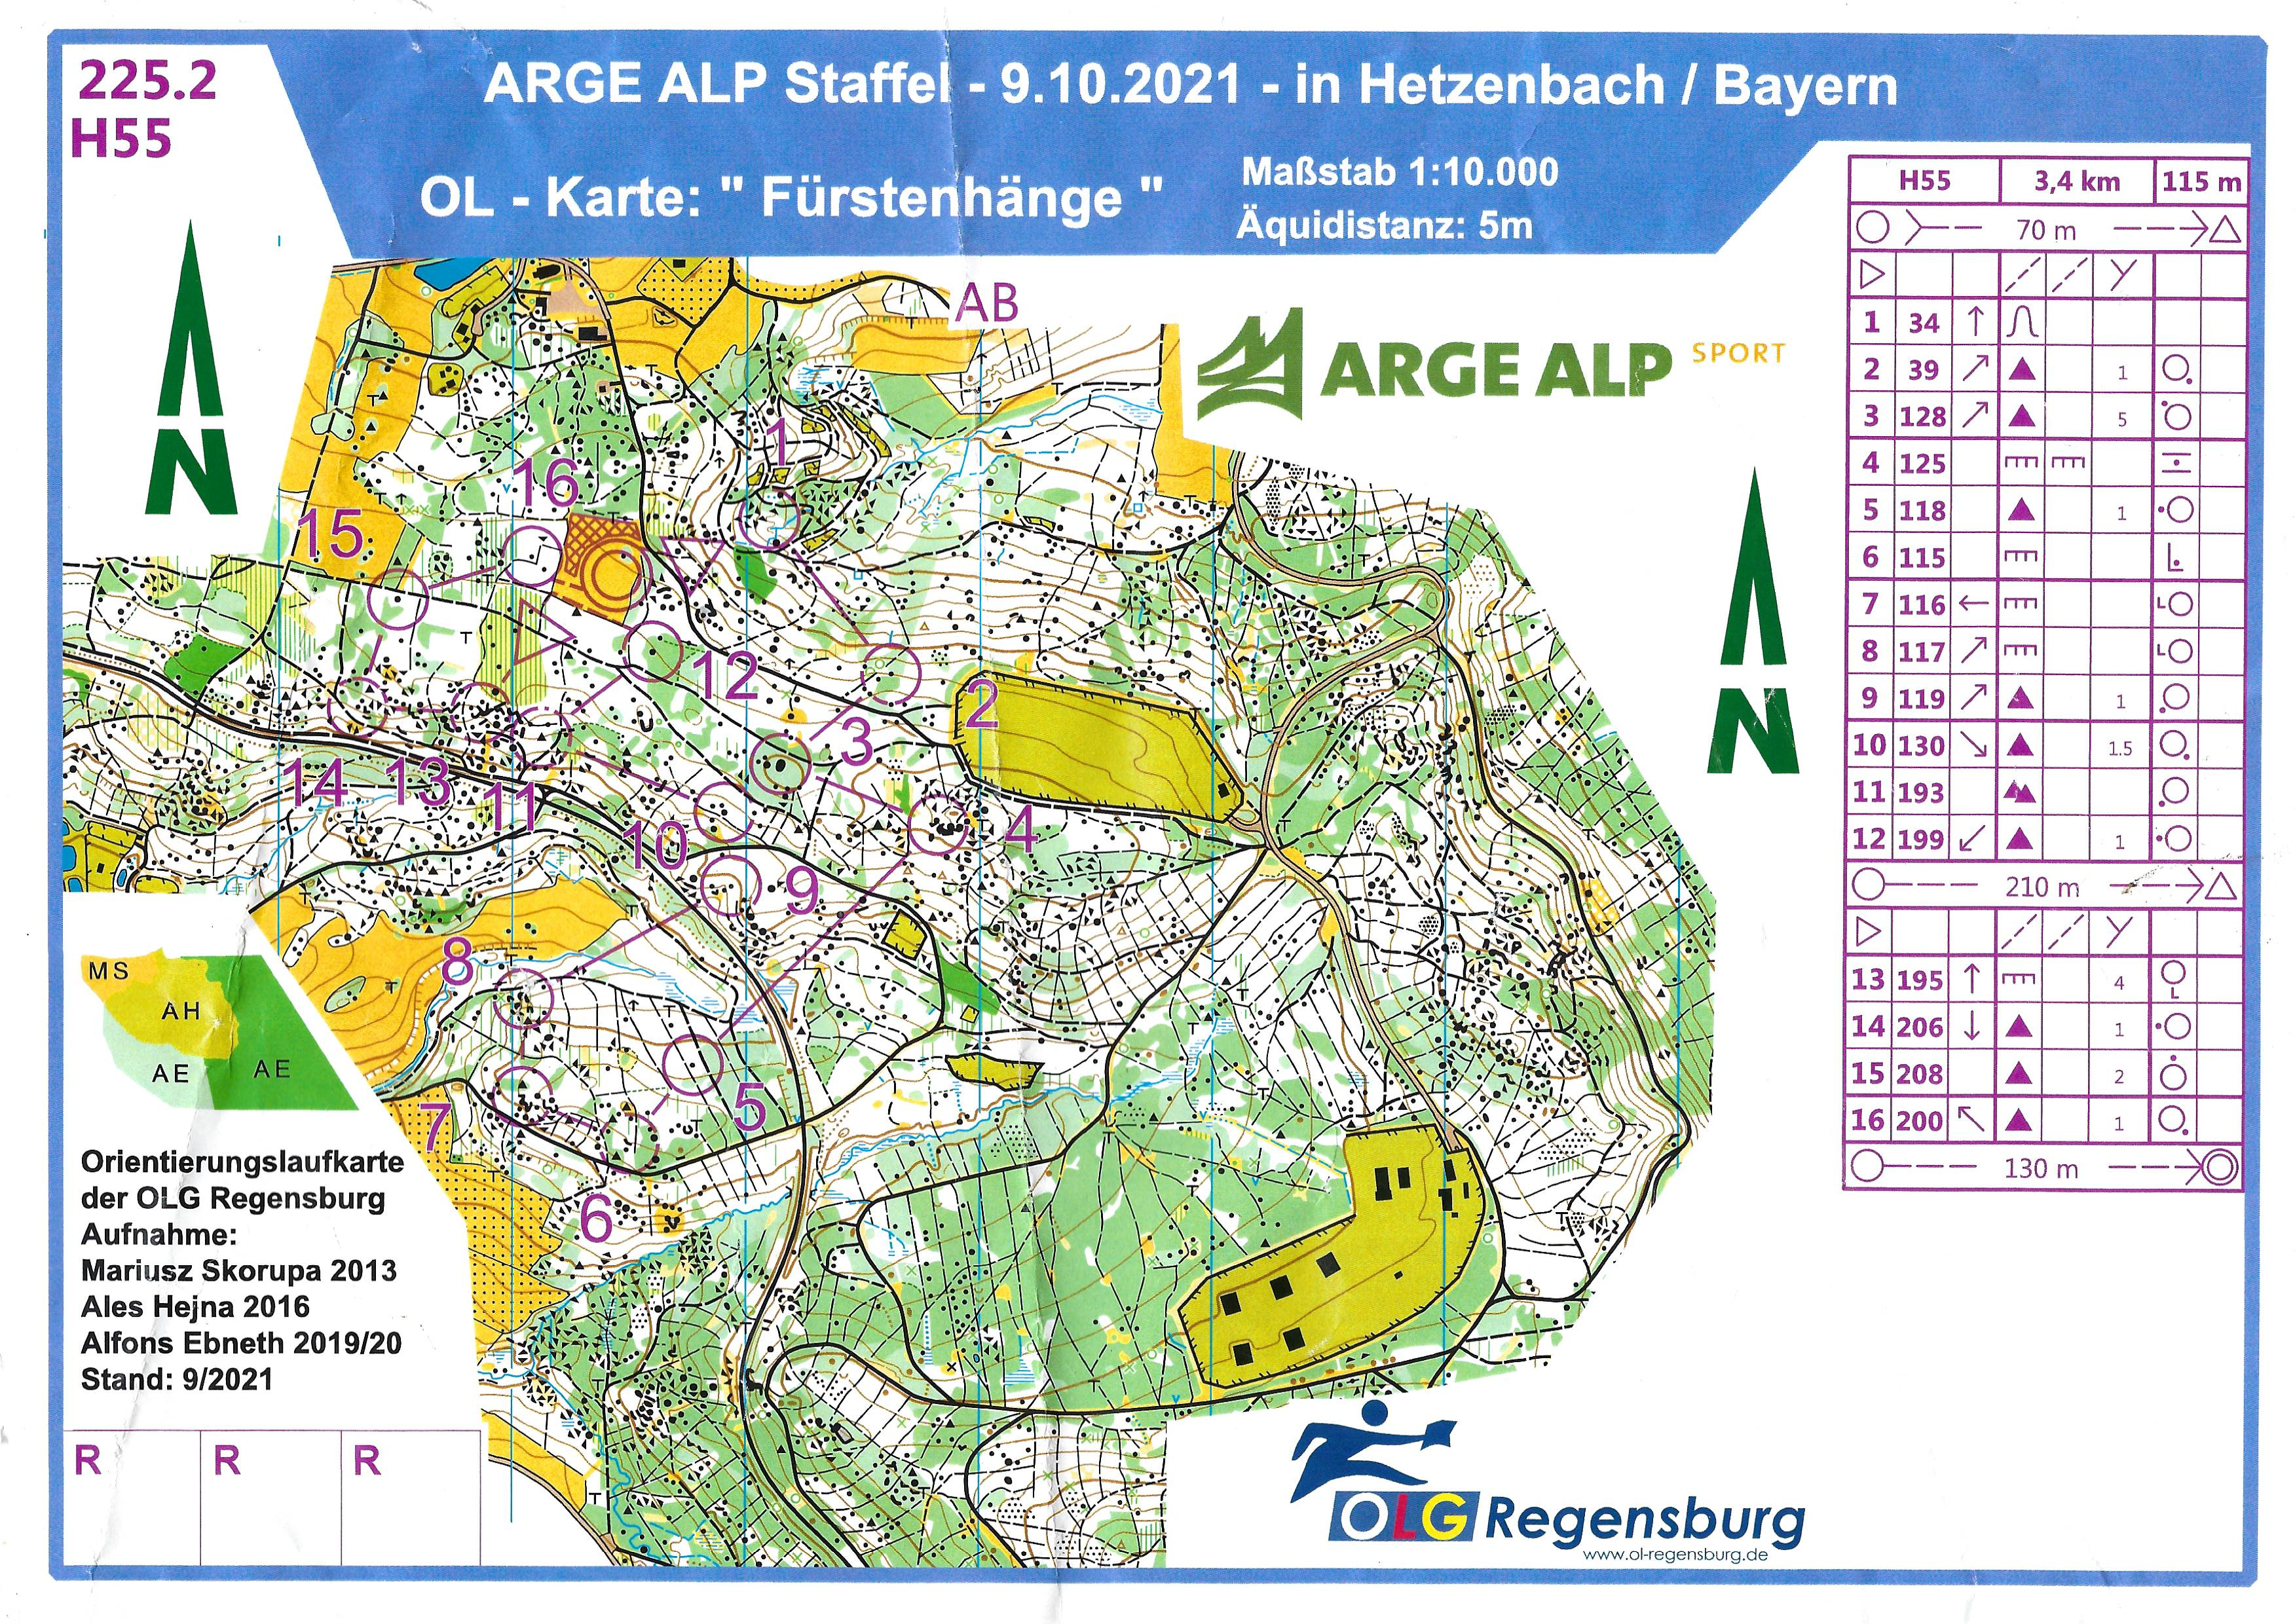 Arge Alp 2021 Regensburg Staffel (09/10/2021)